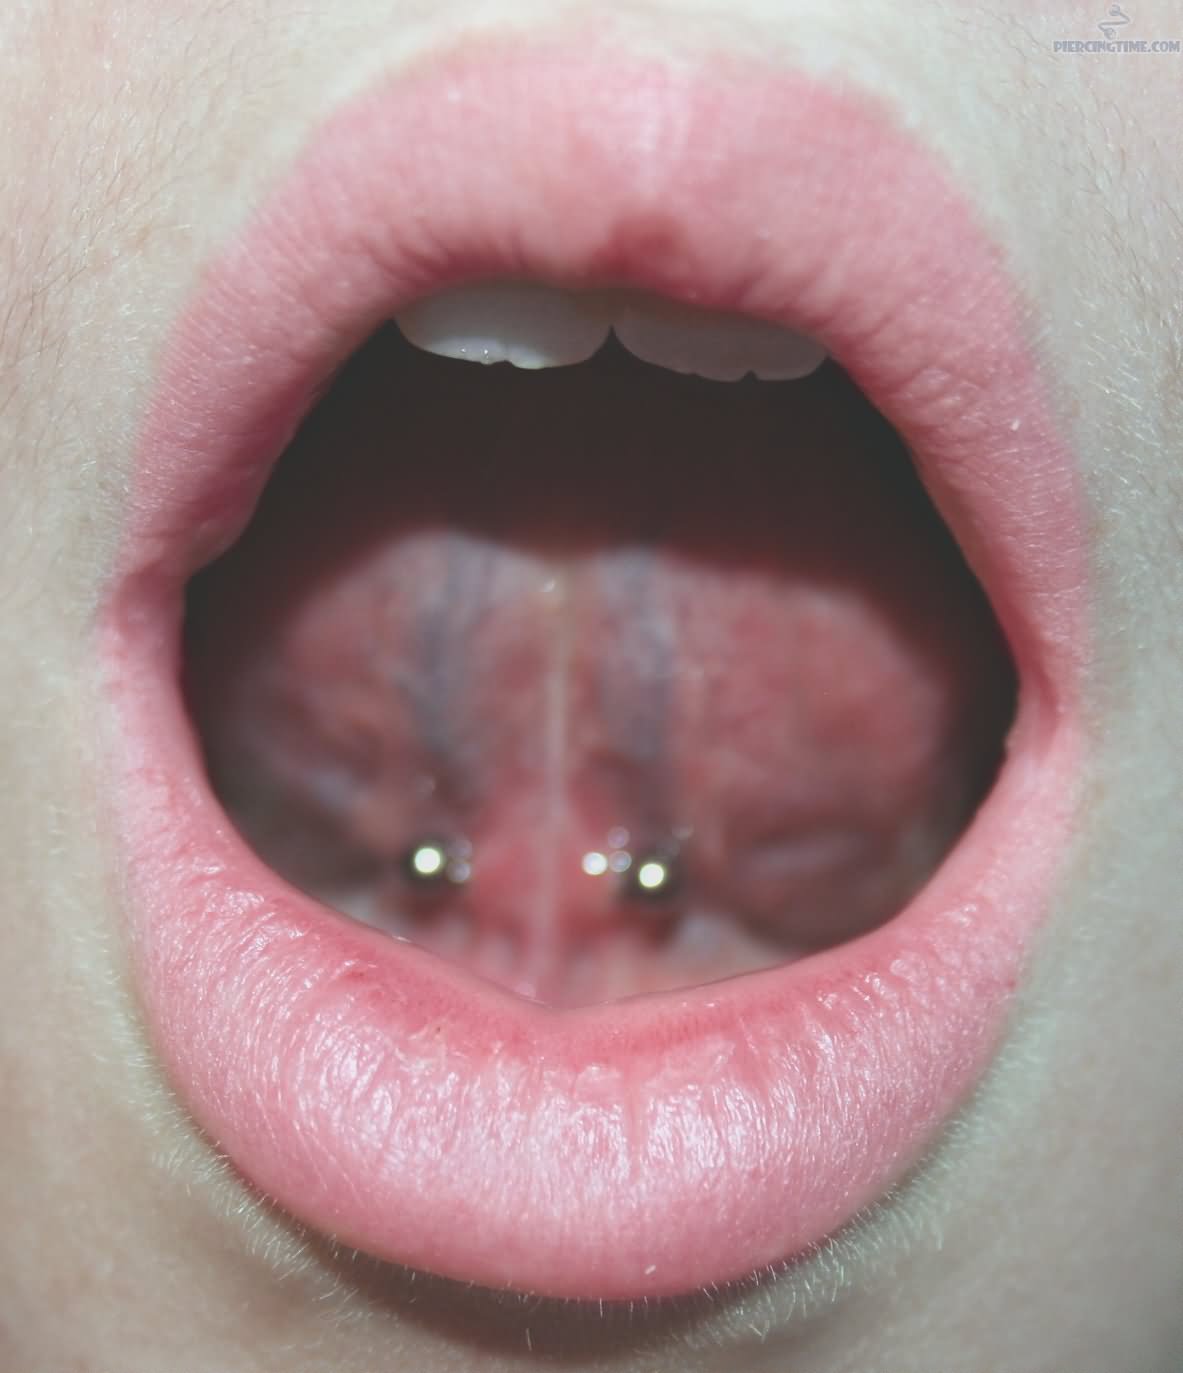 Silver Barbell Tongue Frenulum Piercing Image